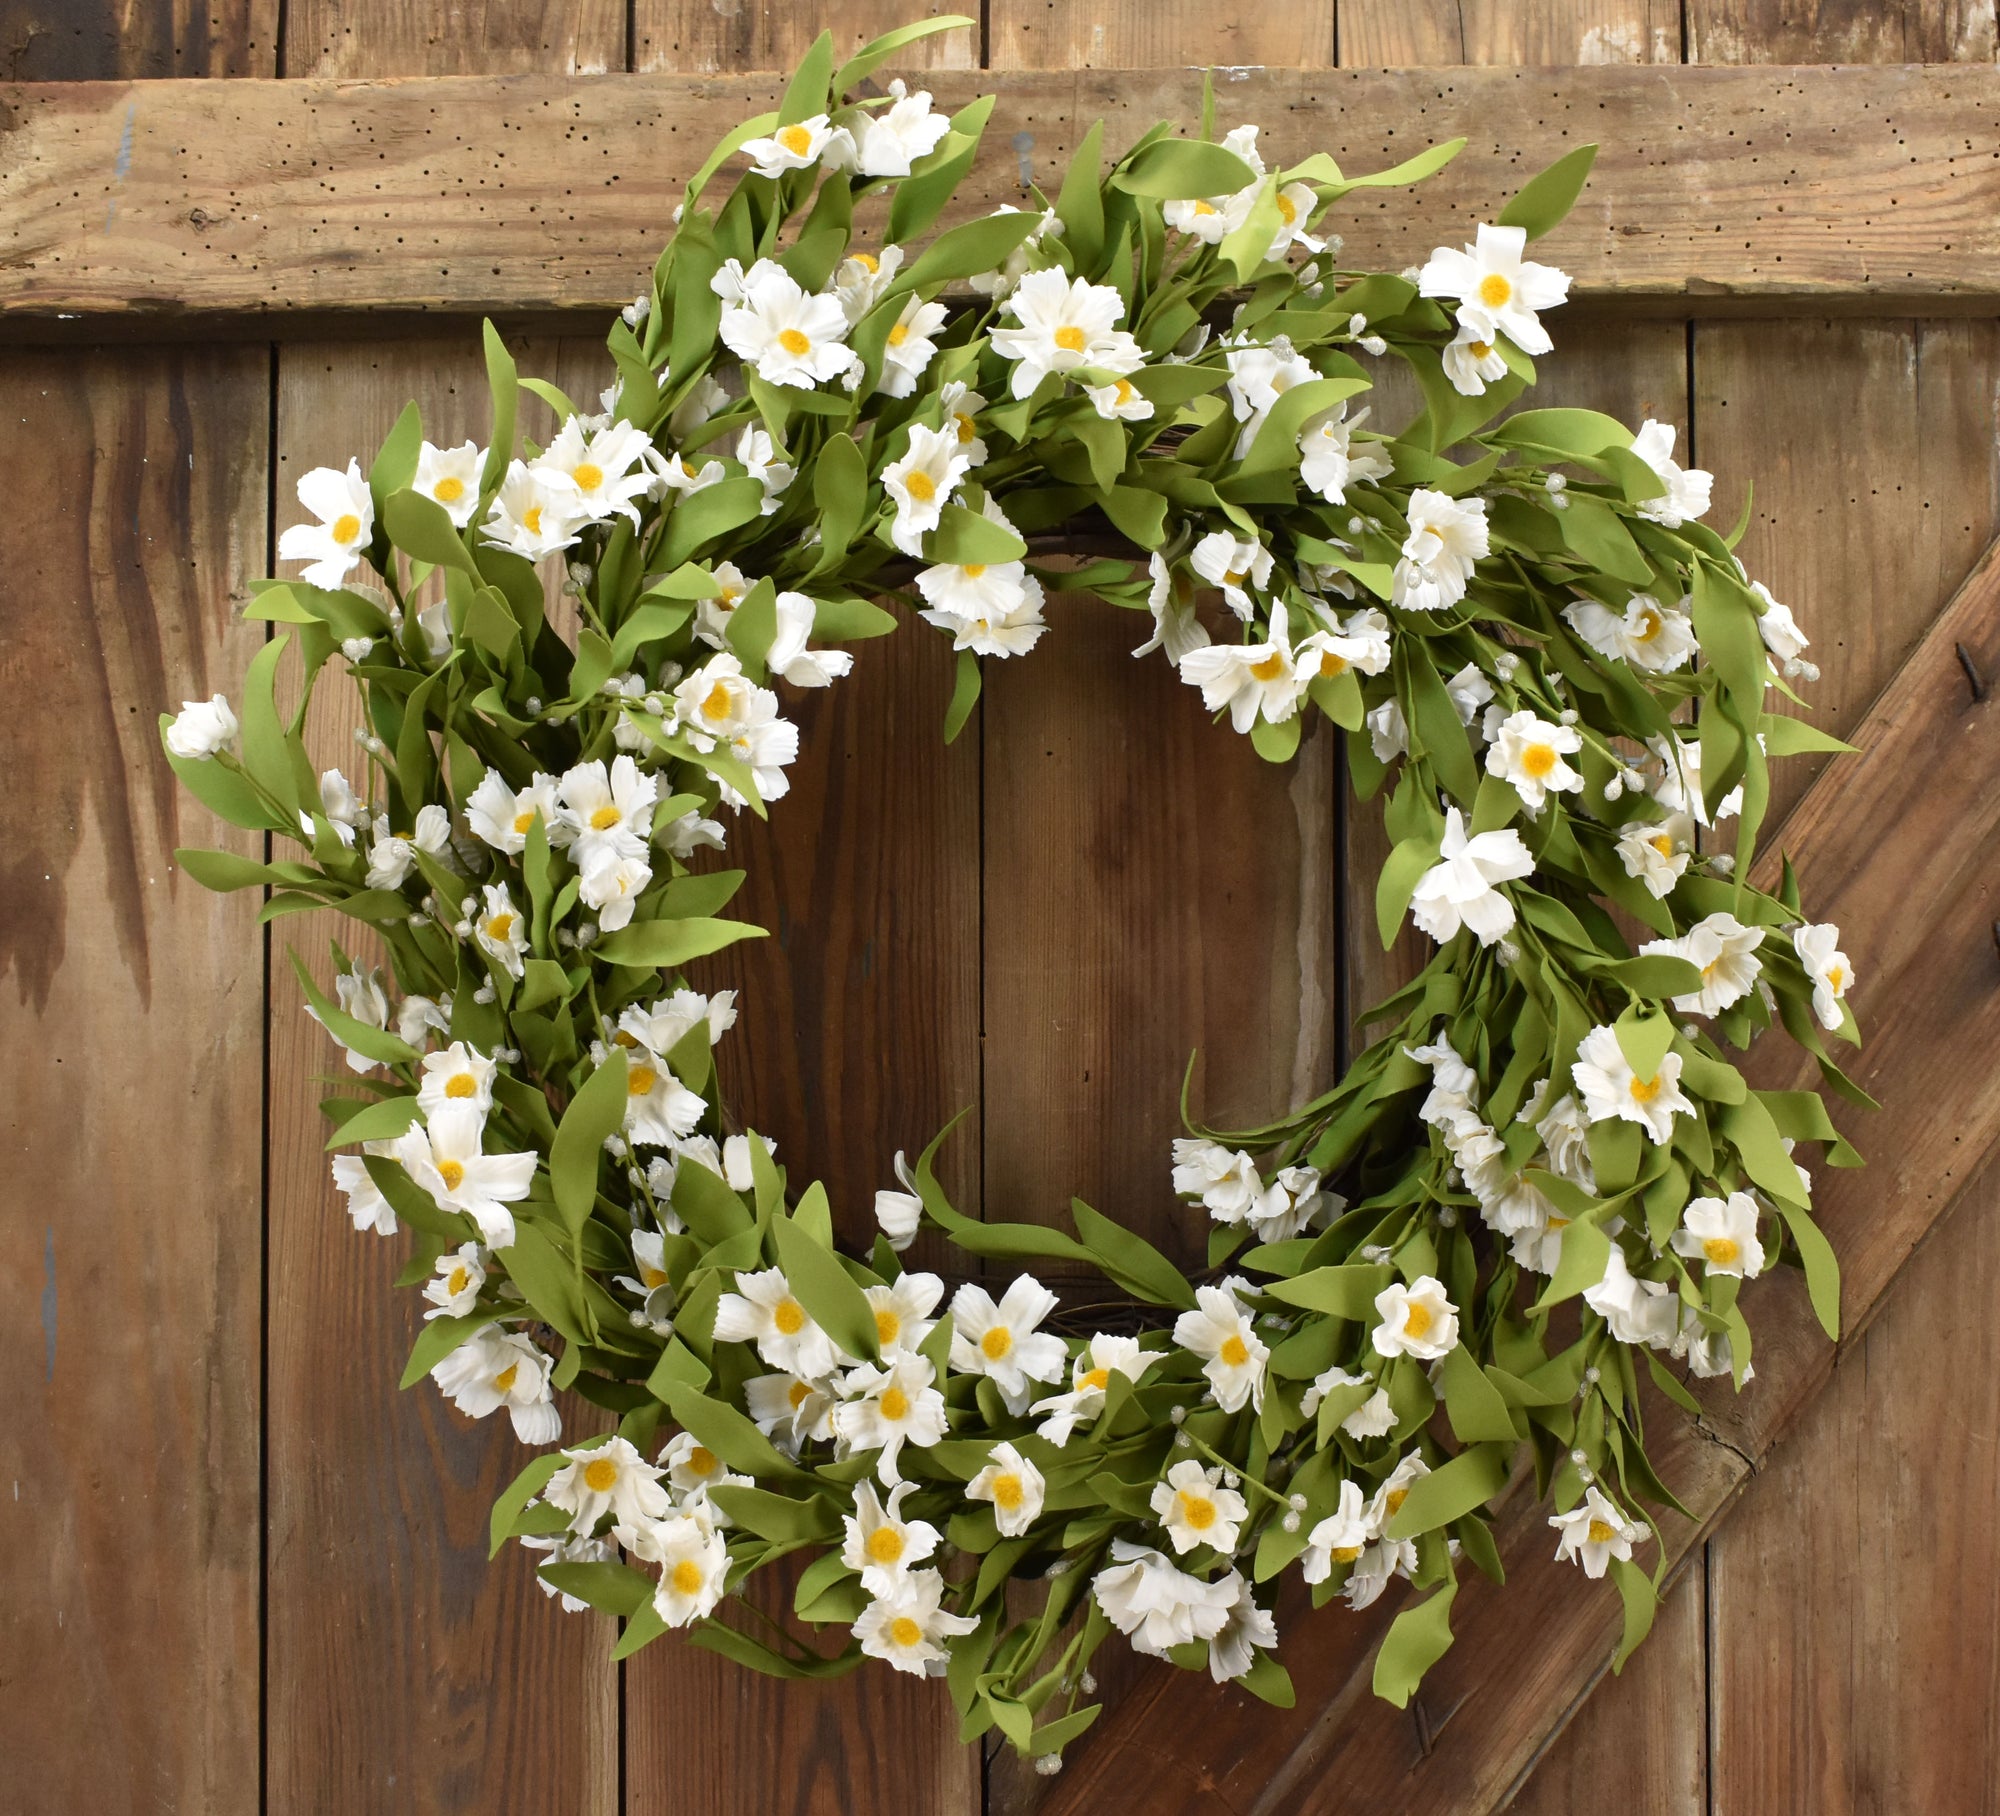 Daisy Wreath - Magnolia